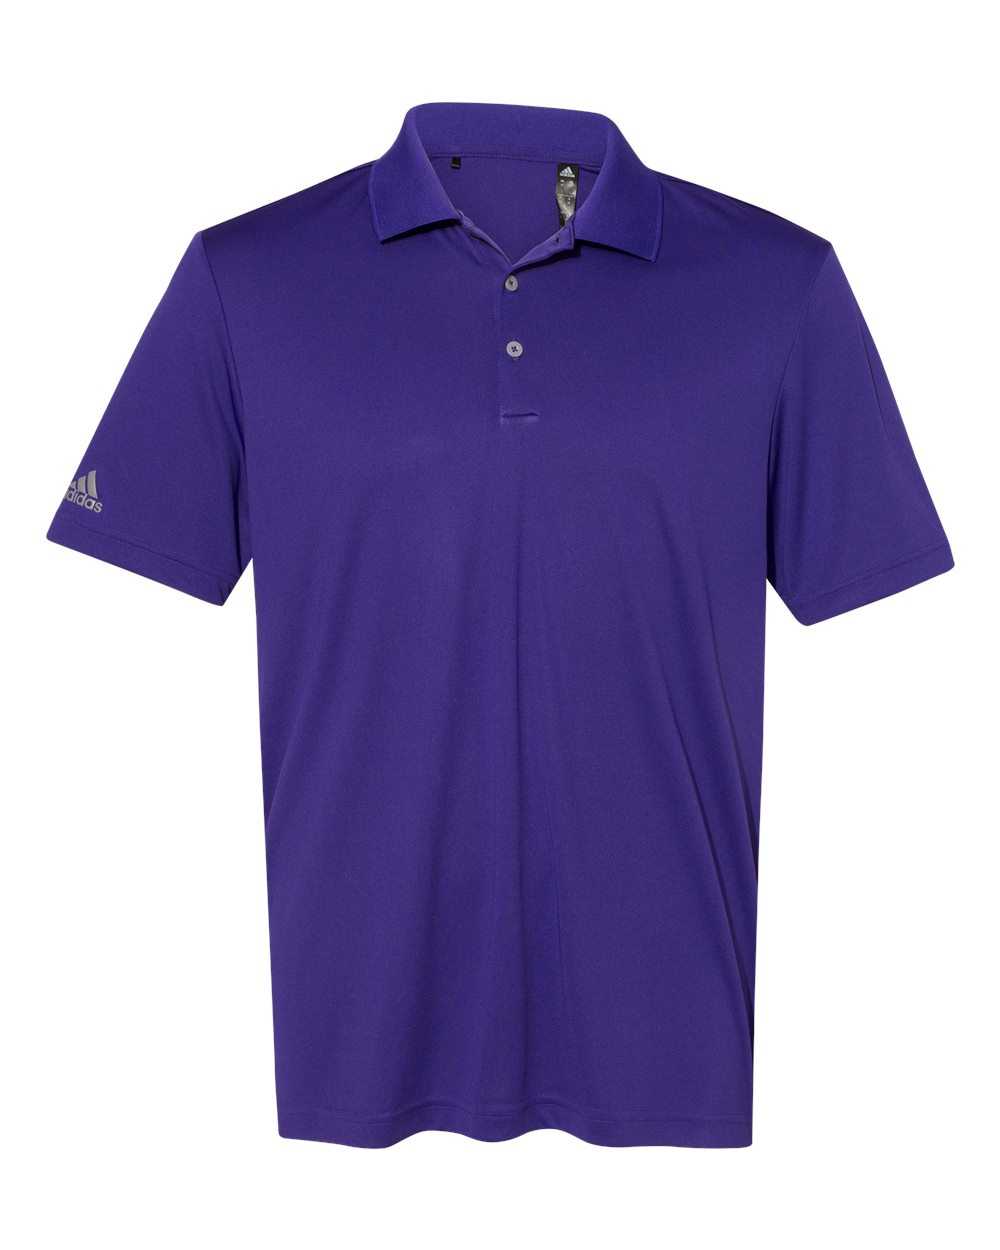 Adidas A230 Performance Sport Shirt - Collegiate Purple - HIT a Double